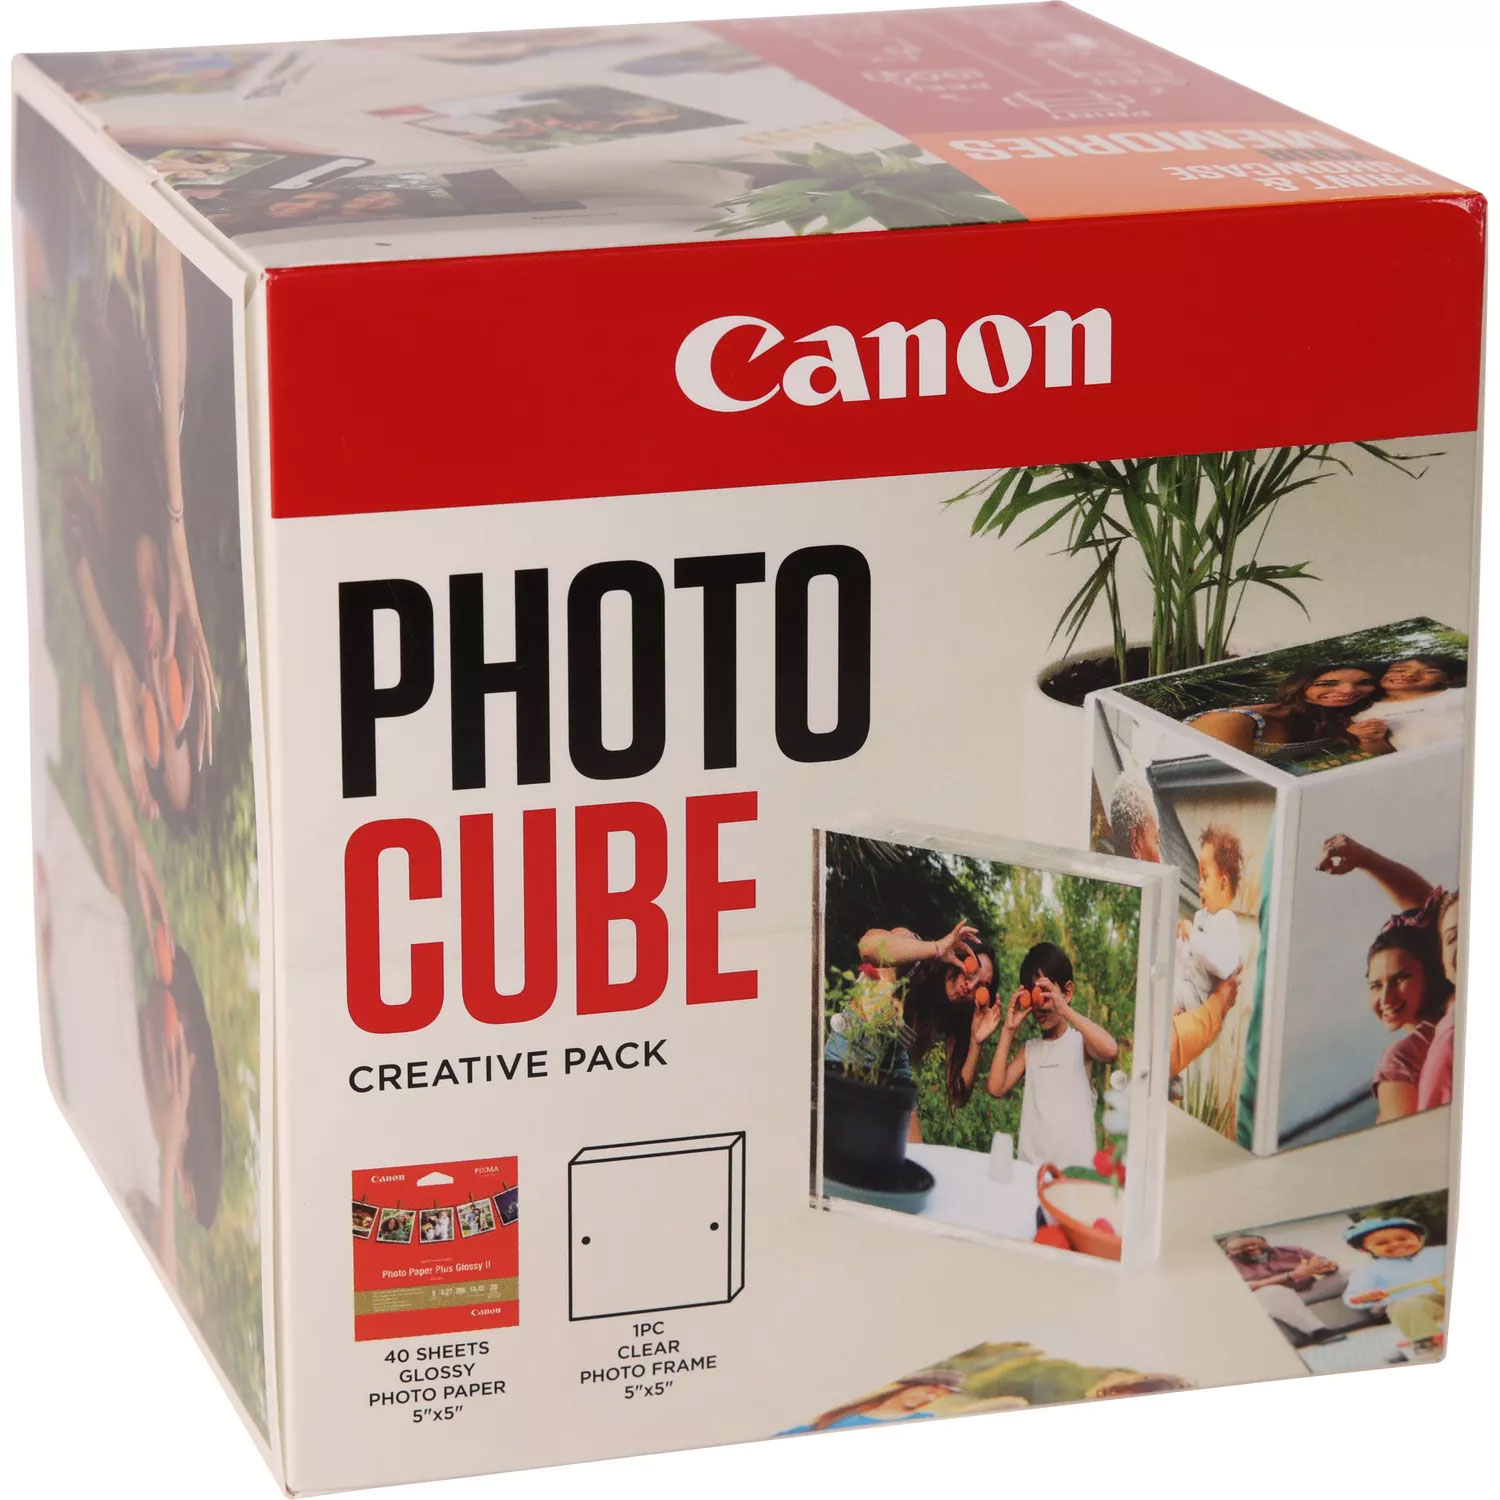 Original Canon PP-201 5X5 Photo Cube Creative Pack (2311B077)